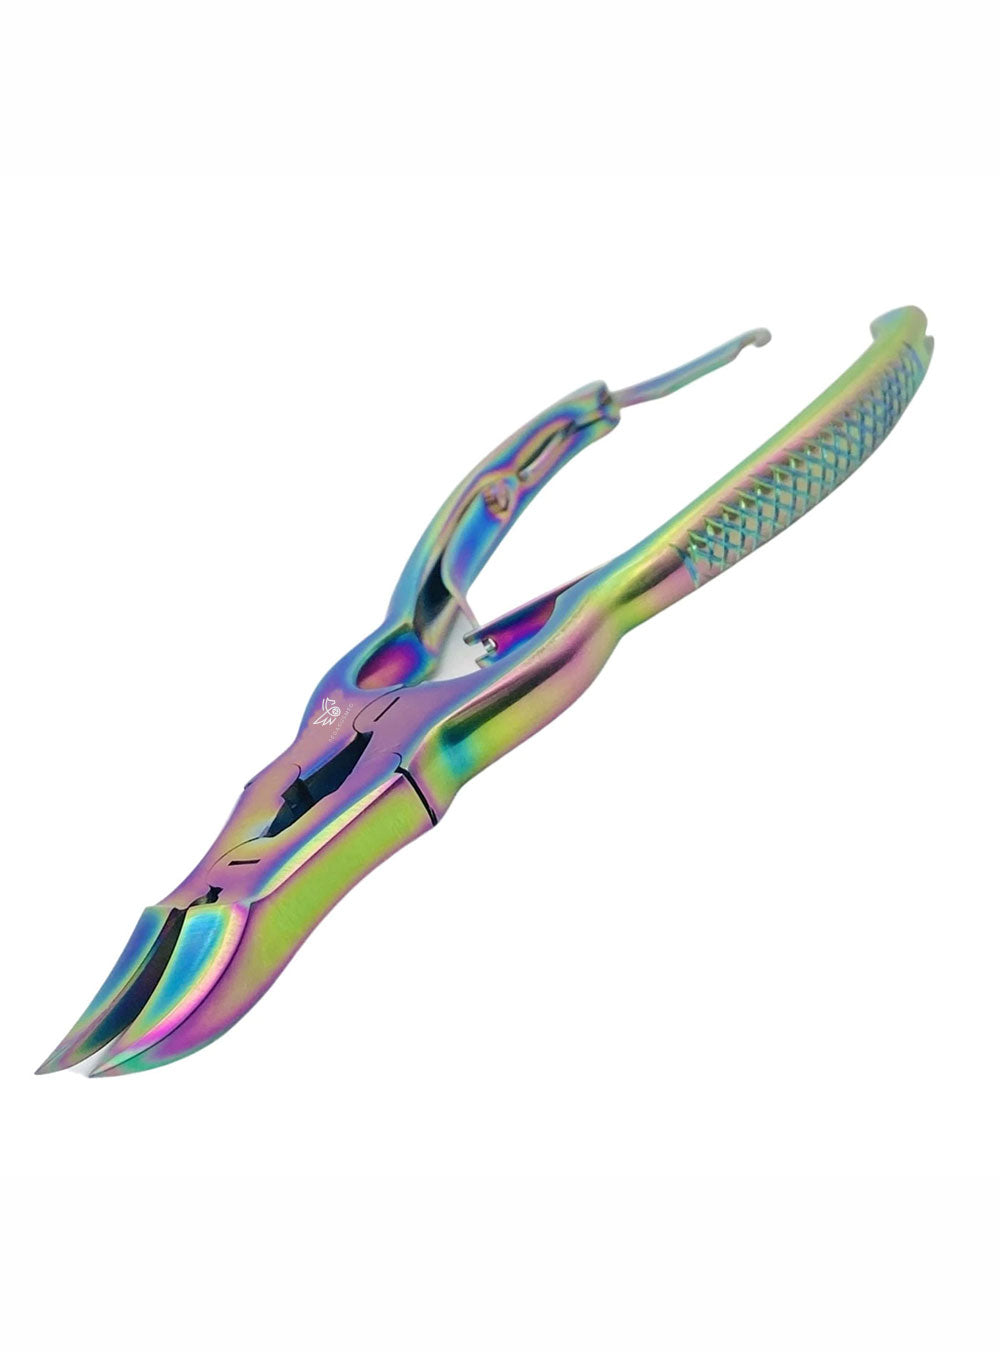 TITANIUM Cantilever Nipper | Angled Concave Blade